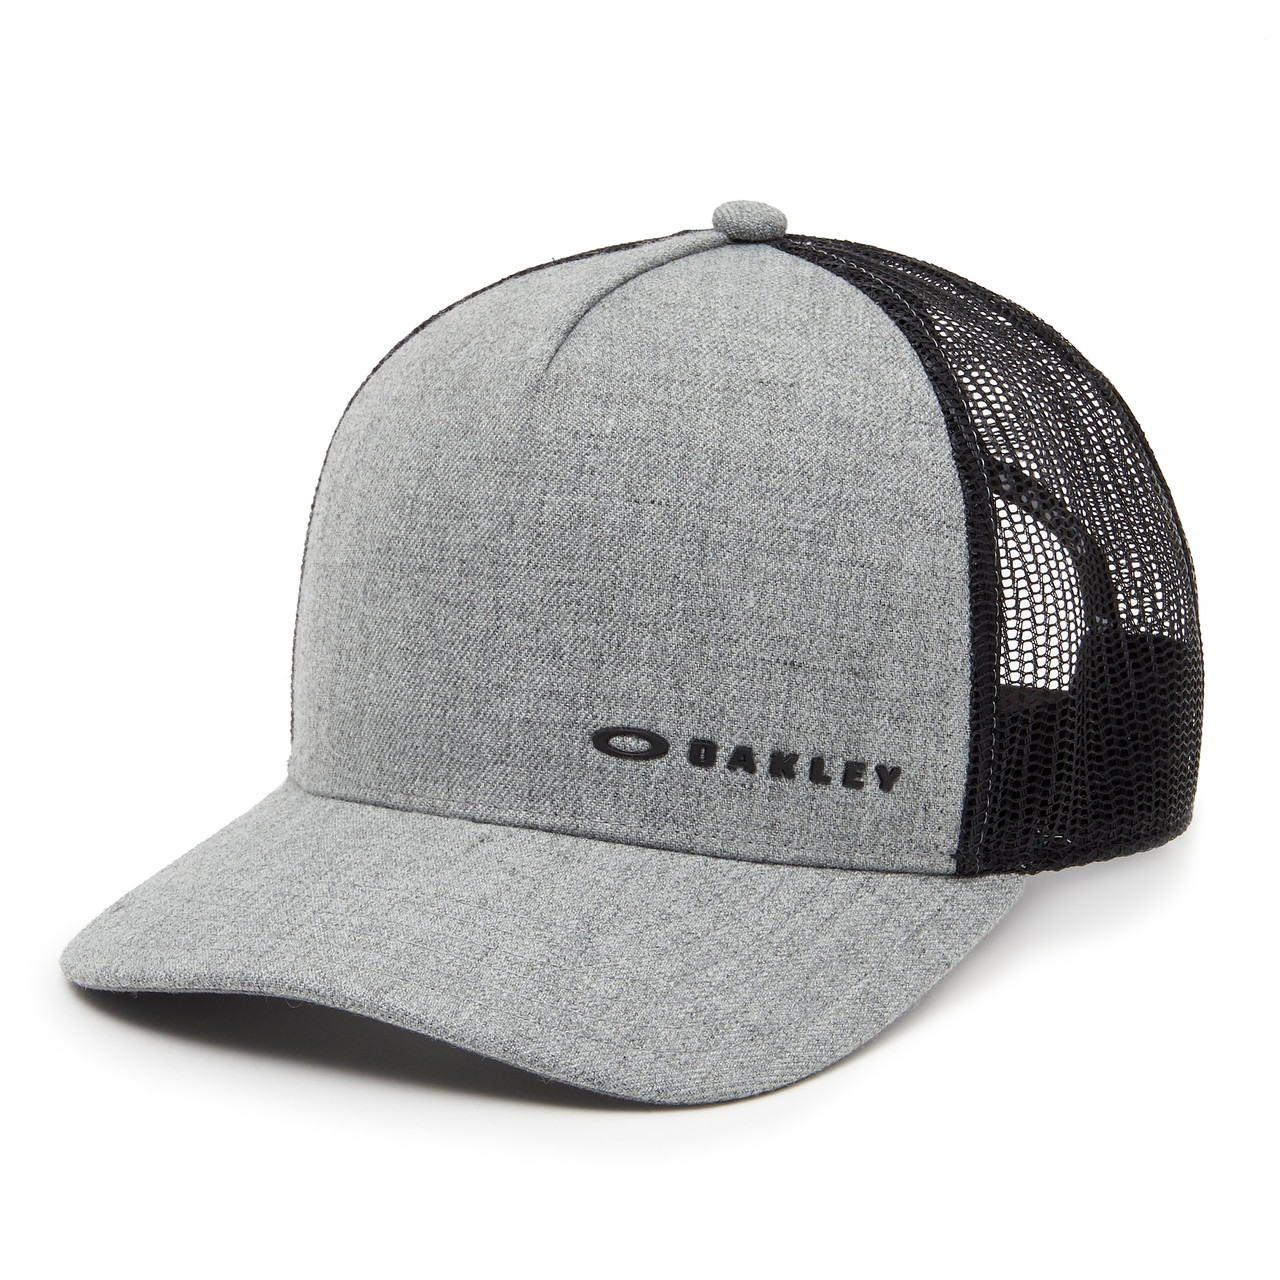 Oakley Men's Mesh Back Snapback Chalten Cap Patch Hats - 911608